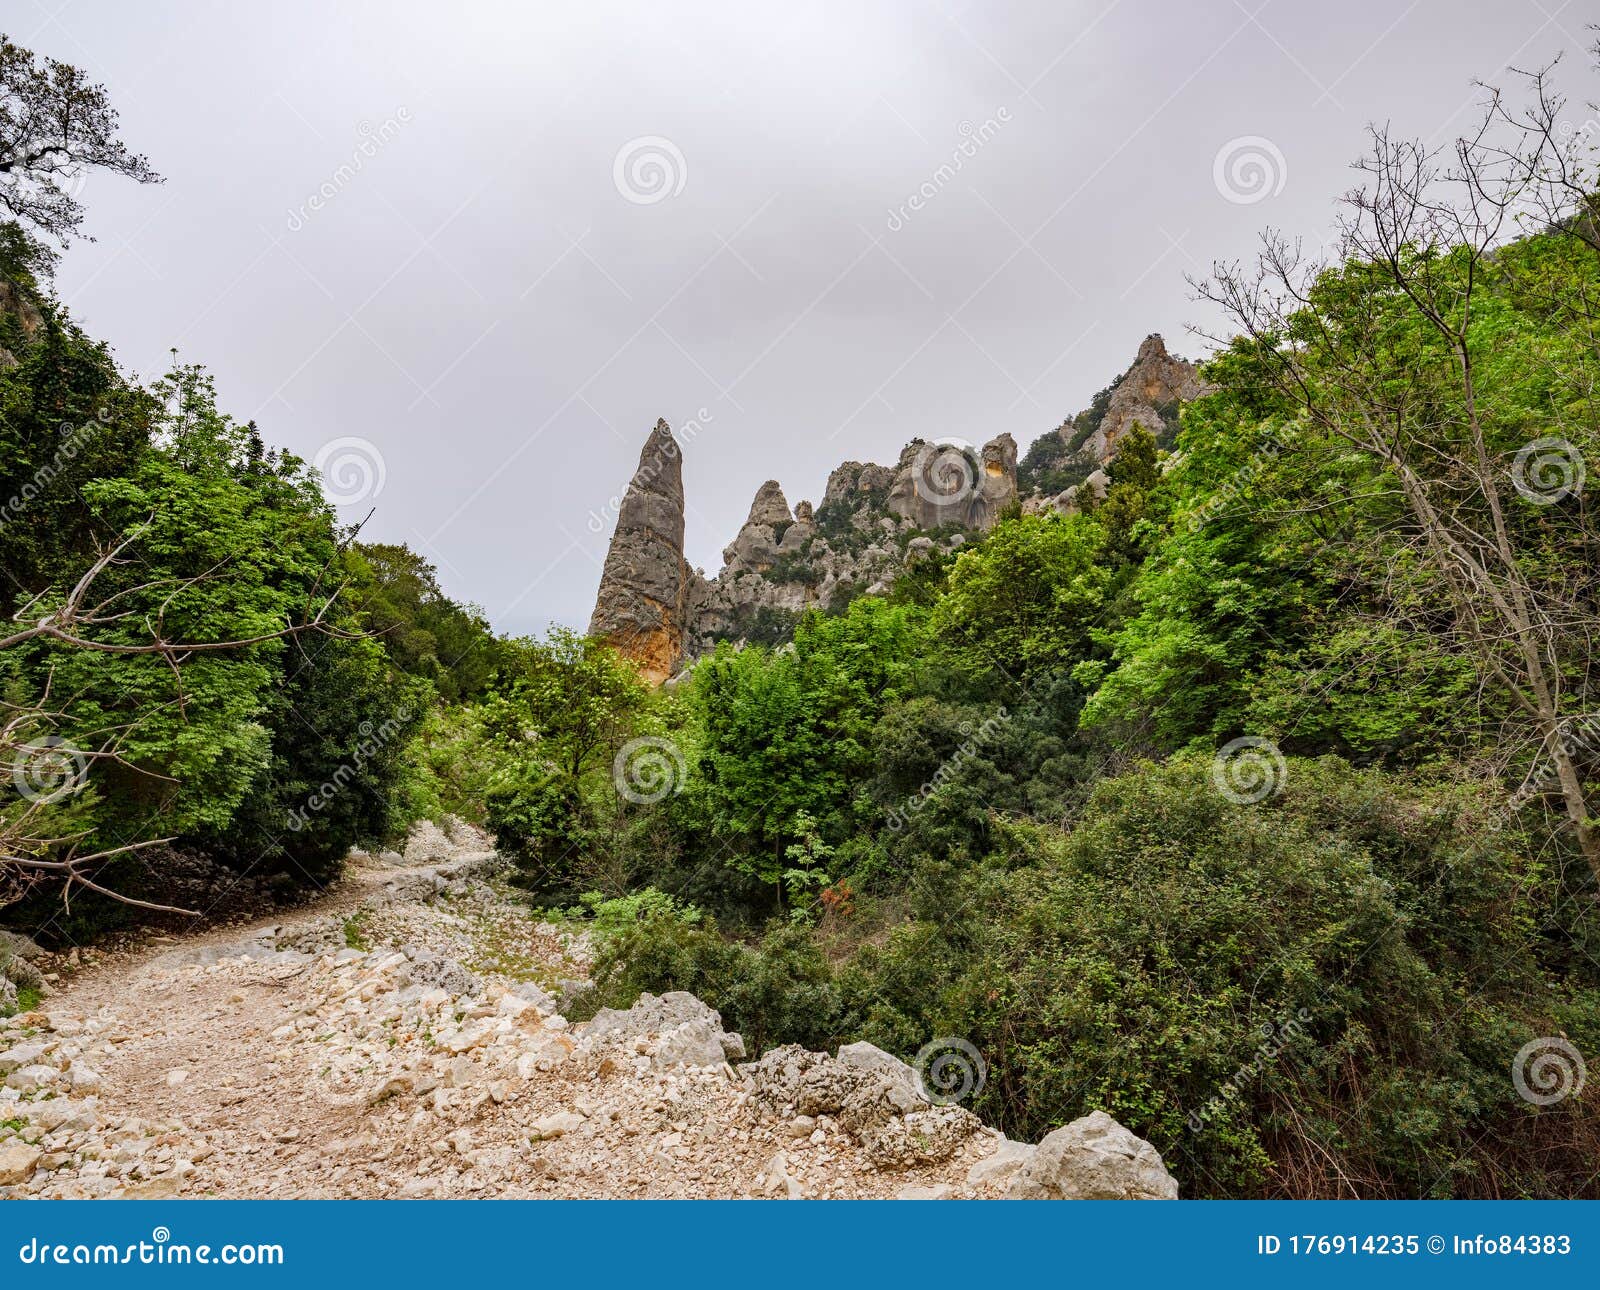 The Path To Cala Goloritze Baunei Sardinia Italy Stock Image Image Of Hill Mountain